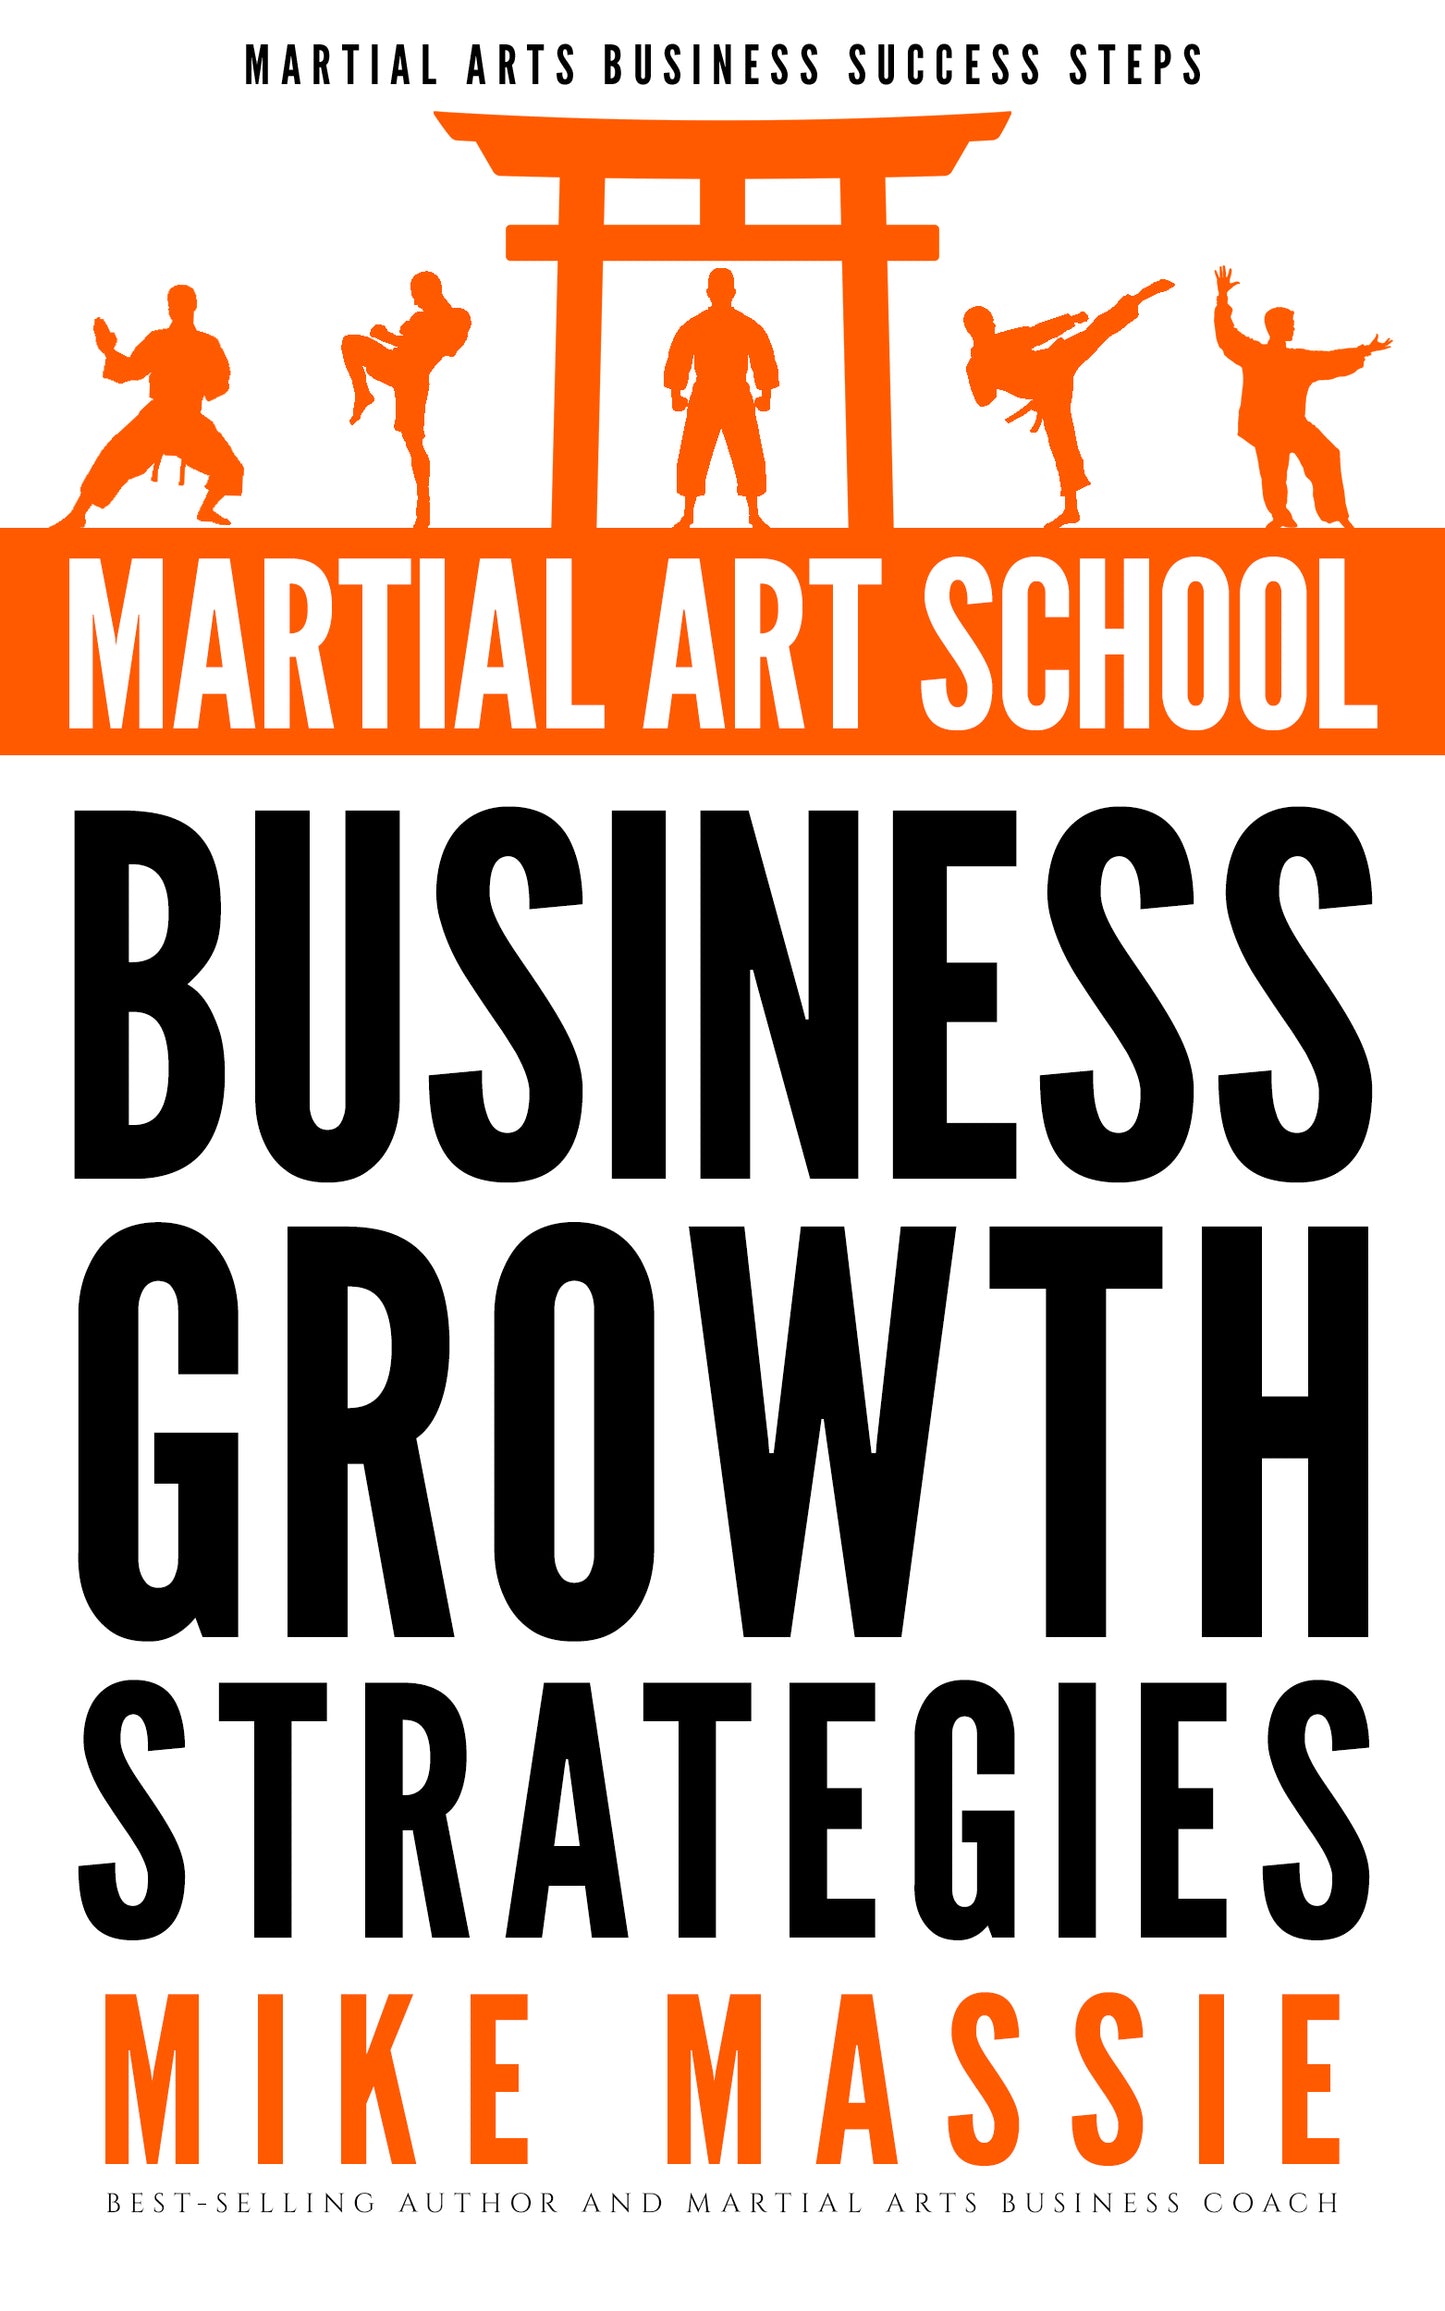 Martial Art School Business Growth Strategies (Kindle & ePub)